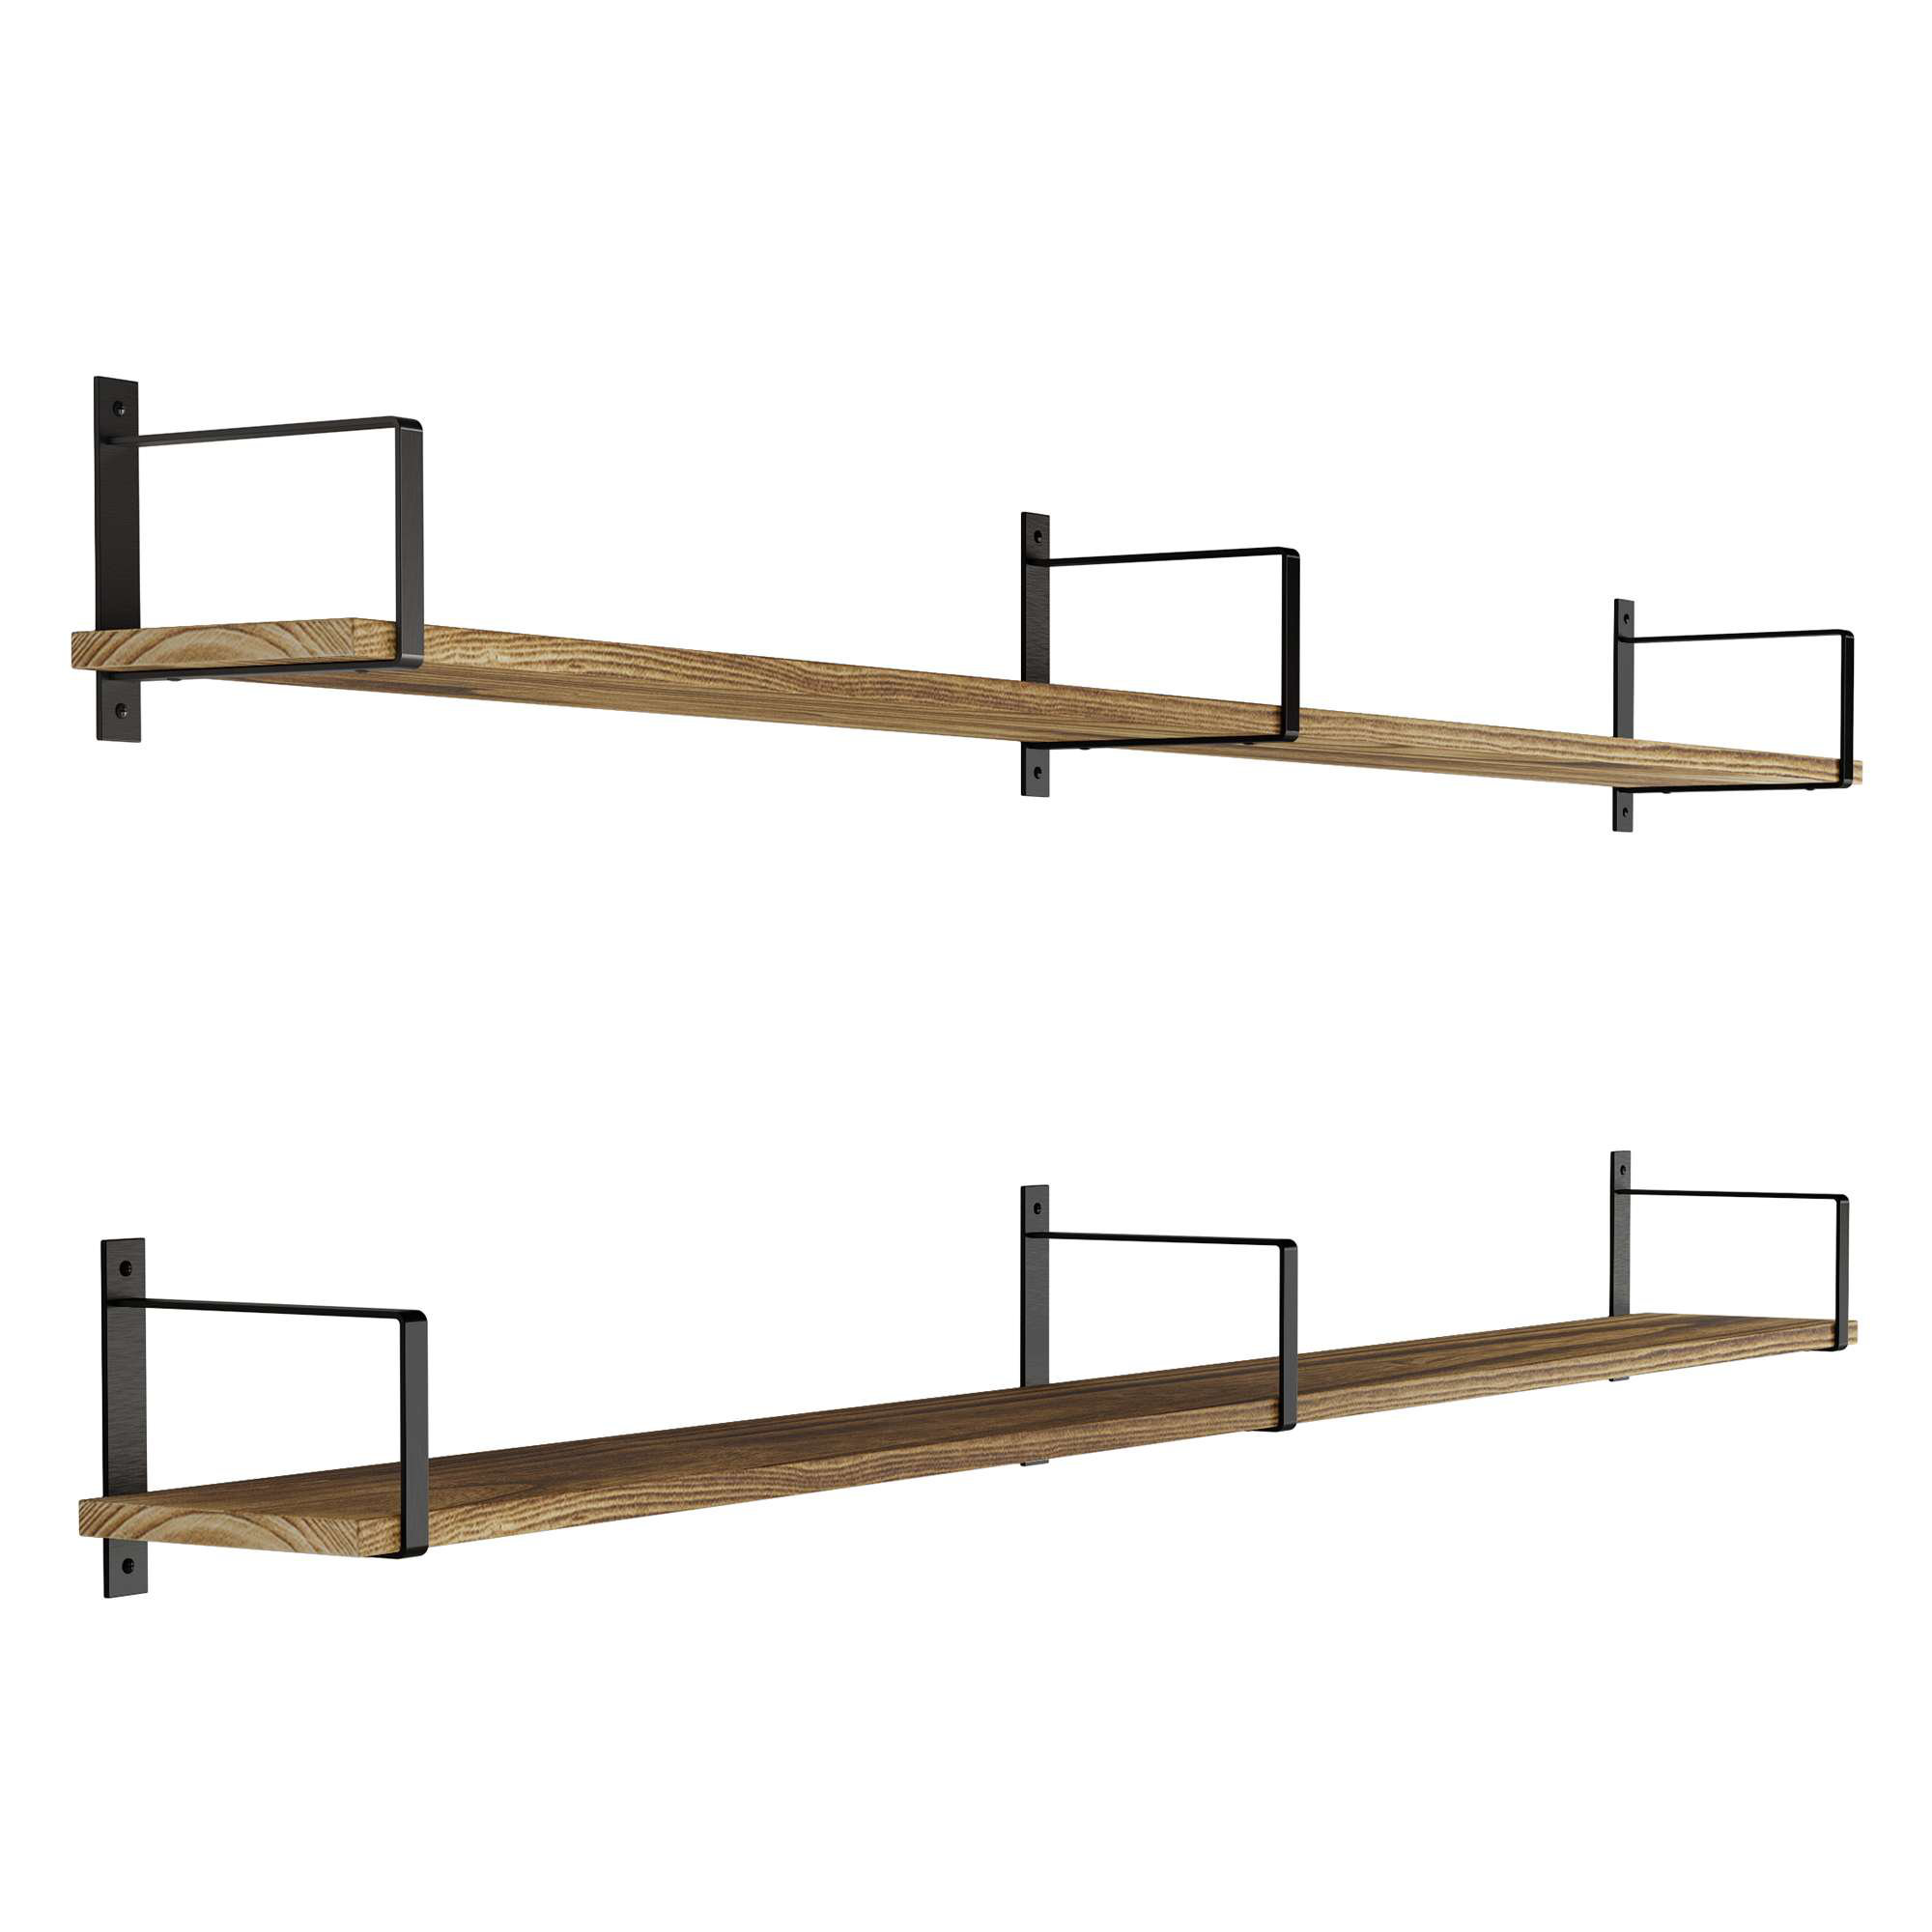 [HD] Stacking Shelf Oak Additional - 2 Shelves